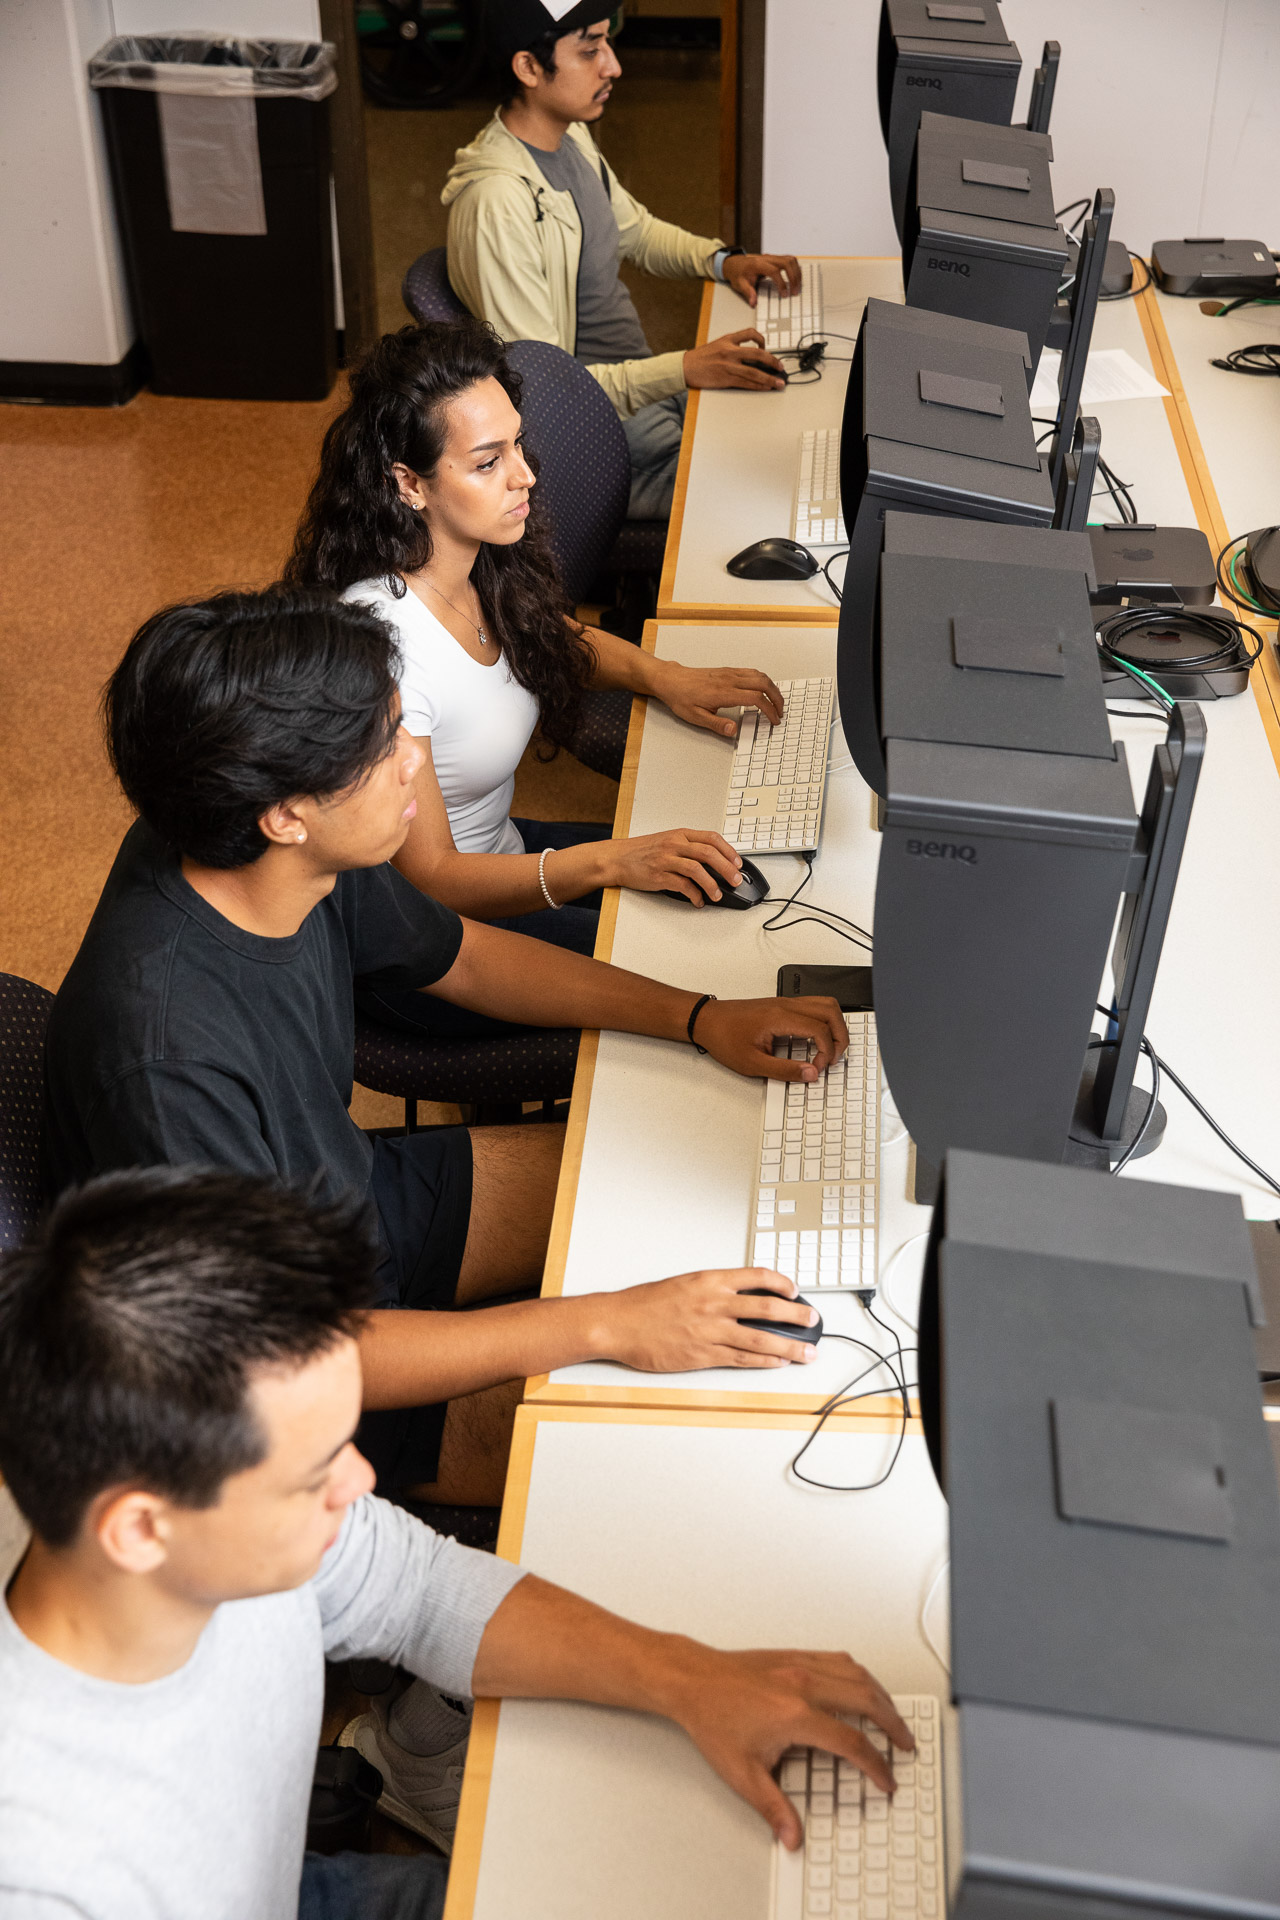 Students at computers